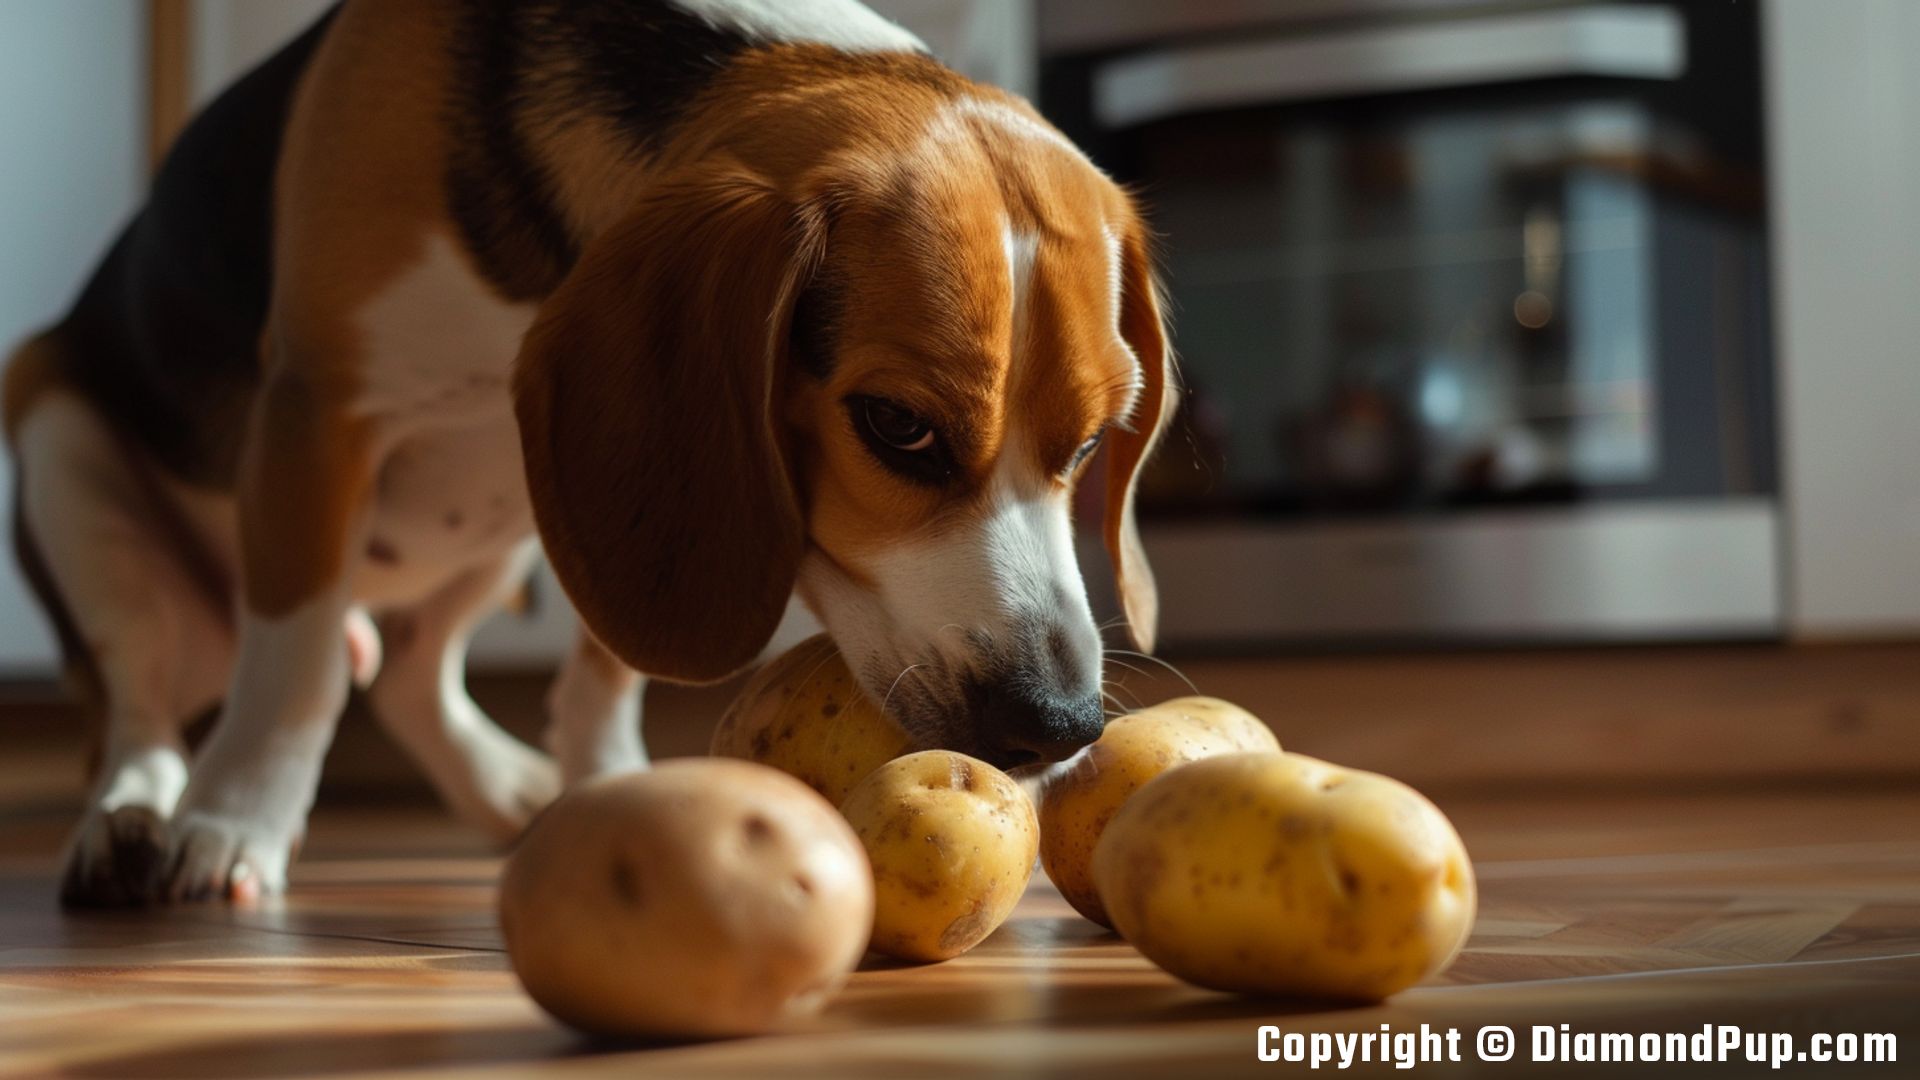 Image of a Playful Beagle Snacking on Potato